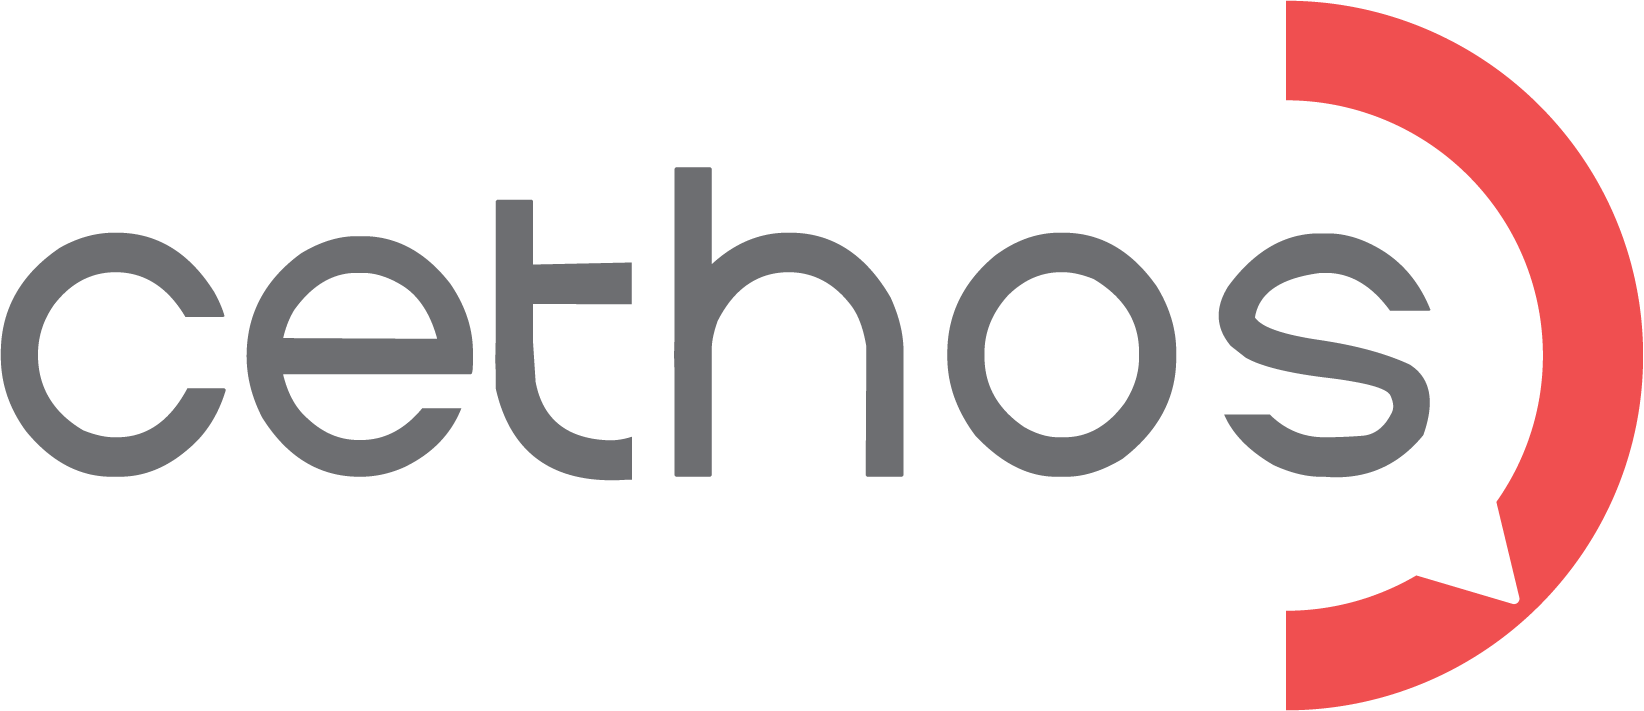 Cethos Translations Logo